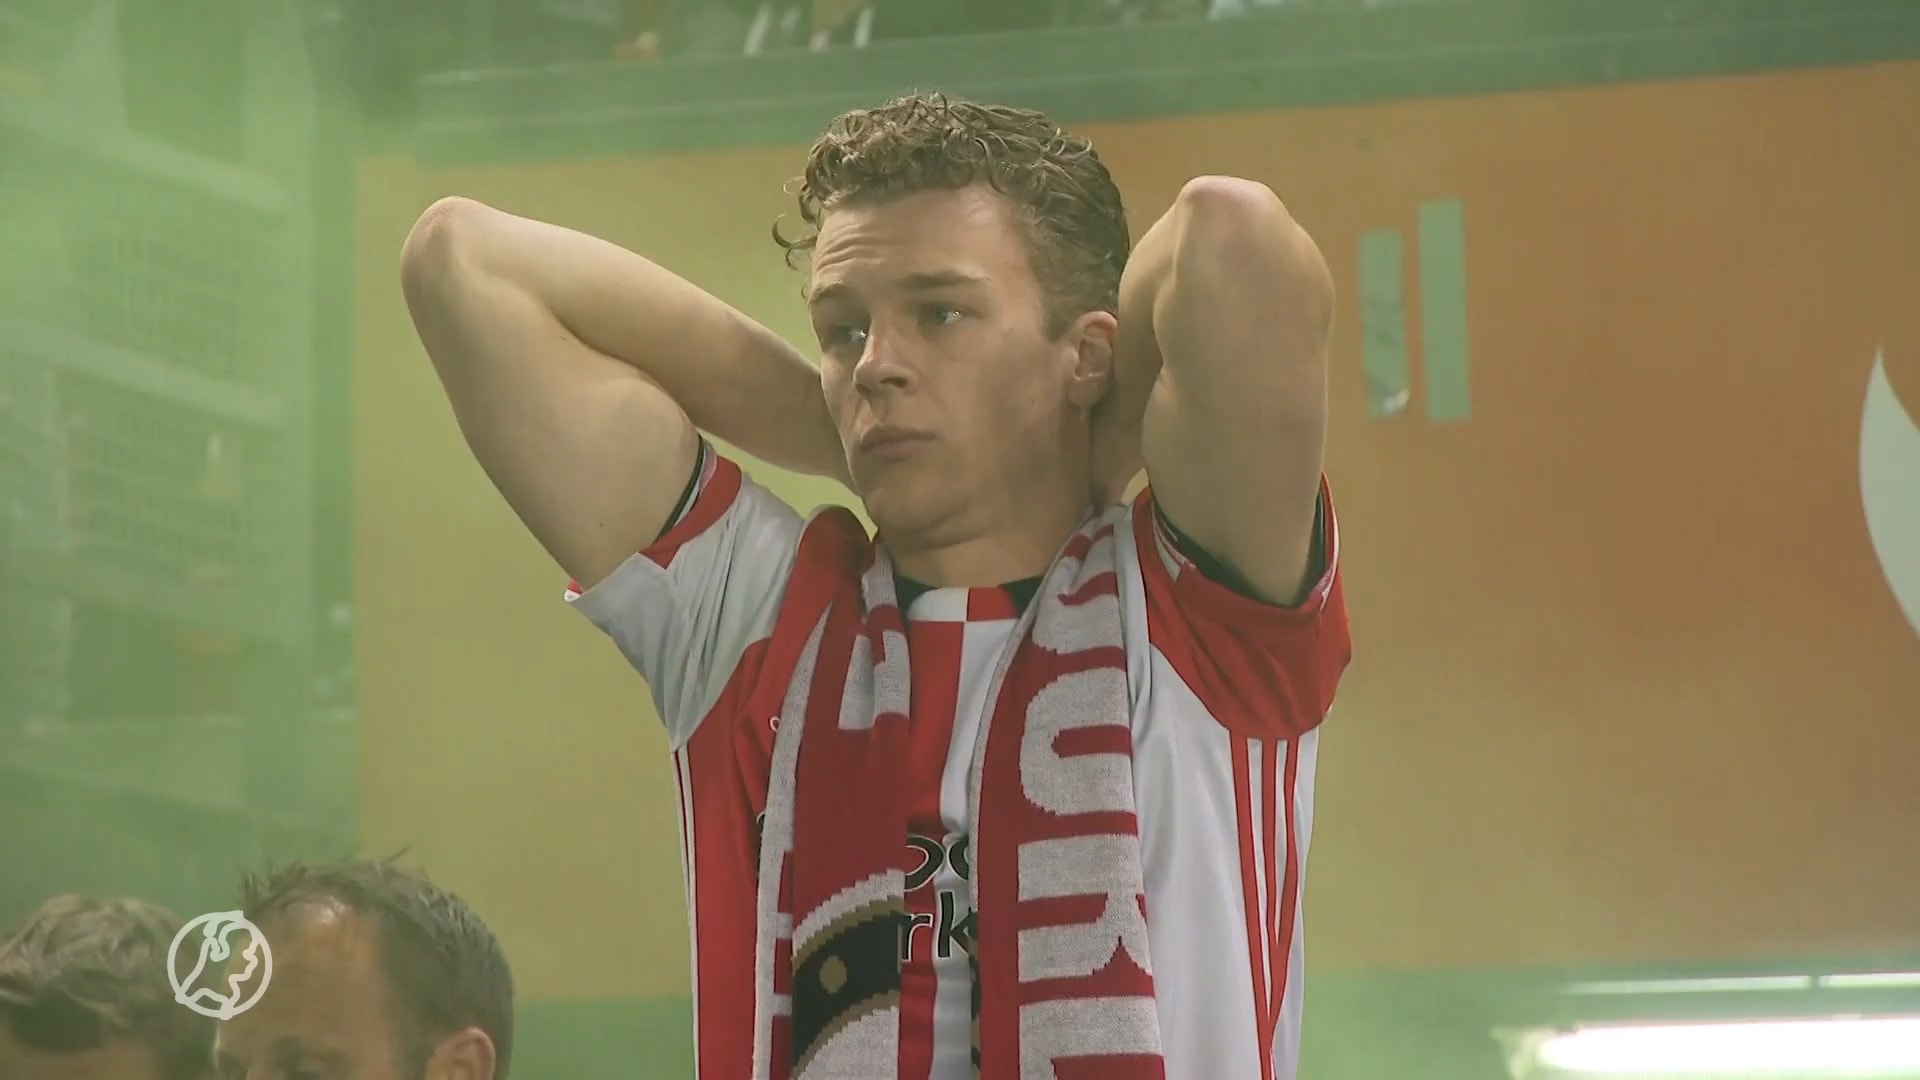 Teleurgestelde Feyenoord-fans druipen af na verloren finale: 'Ontzettend jammer dit'